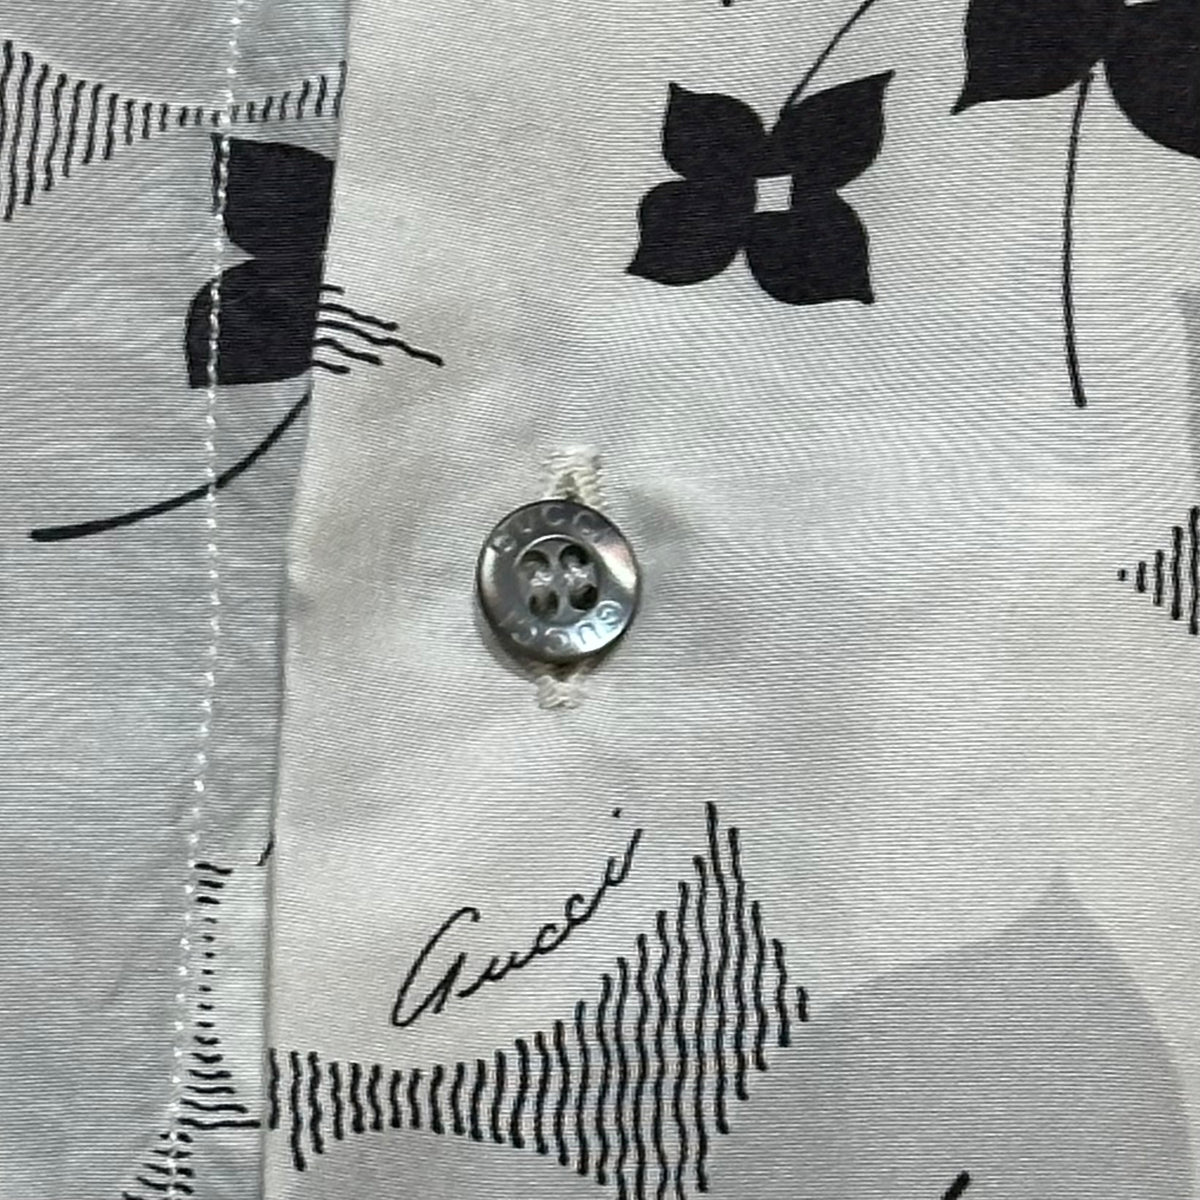 Vintage Gucci Shirt • Button Up Grey Floral